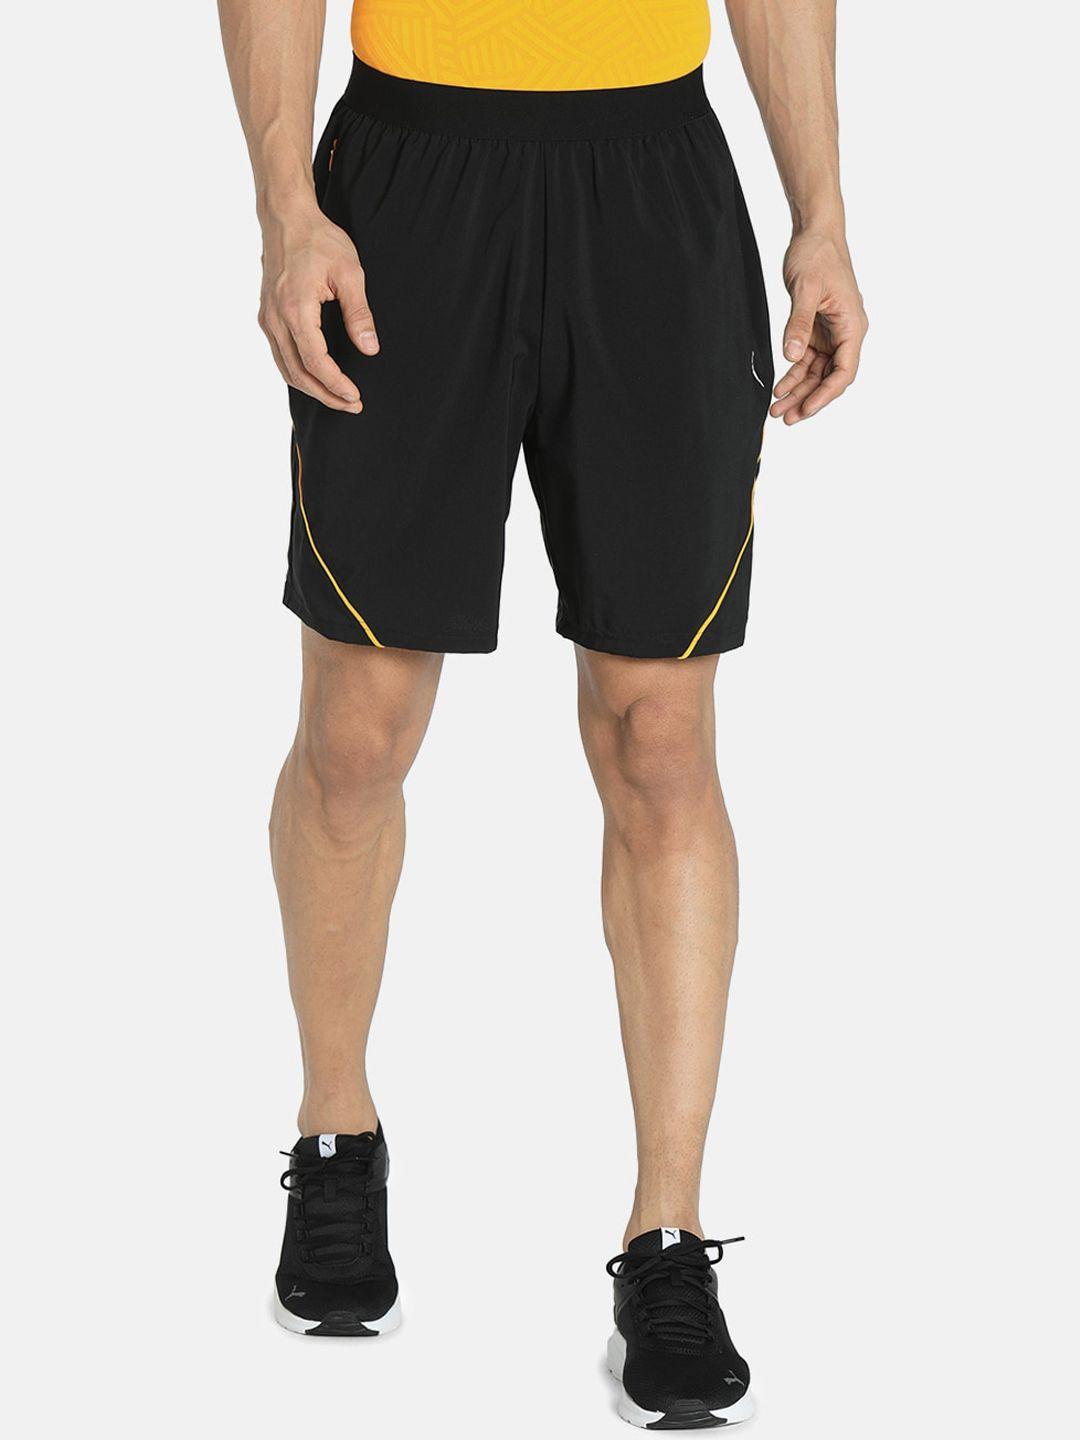 Puma Men Black Slim Fit one8 Virat Kohli Sports Shorts